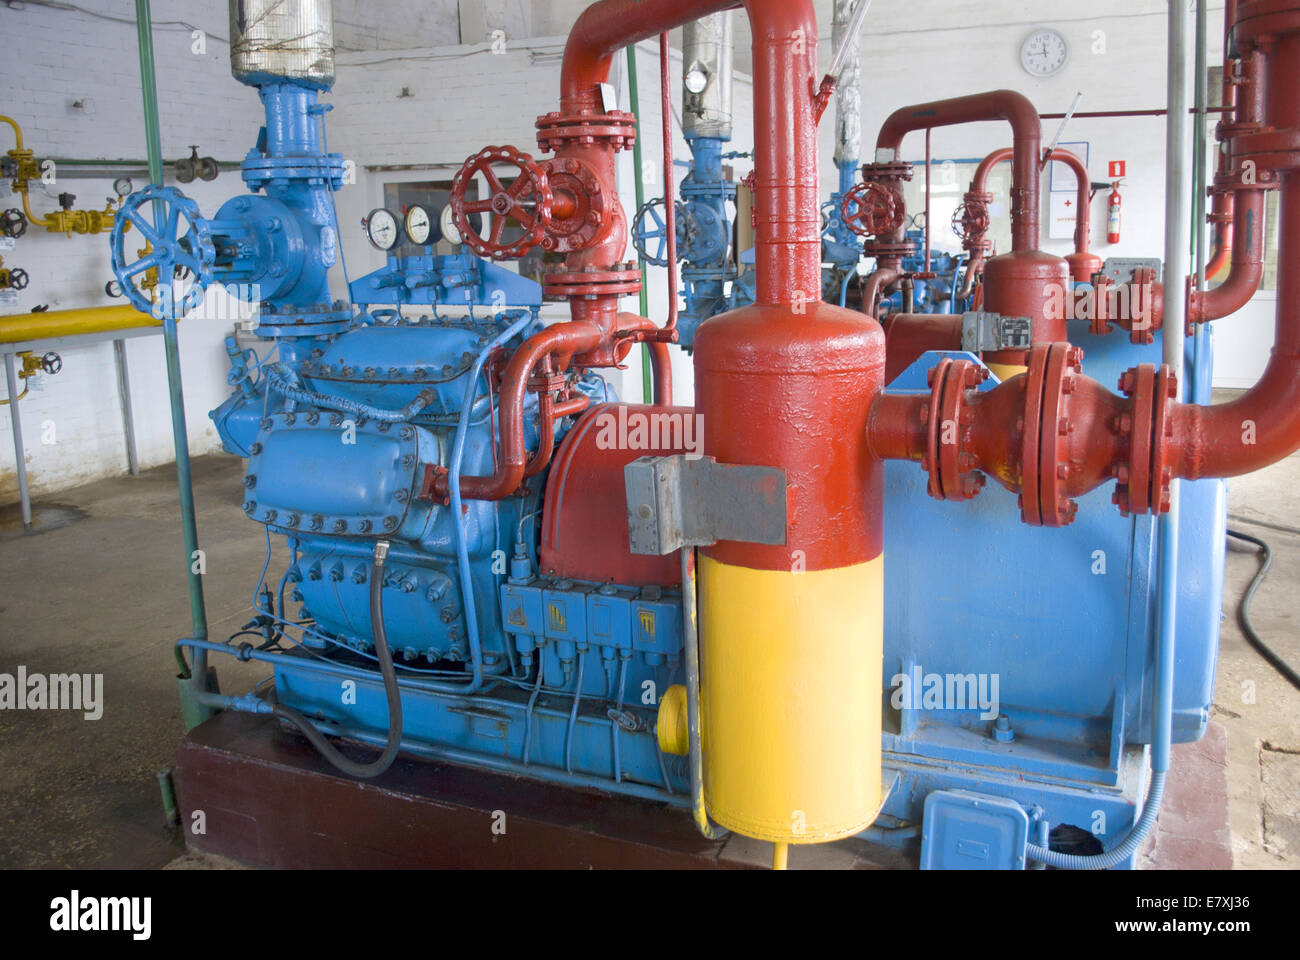 Ammonia refrigeration compressor. Stock Photo